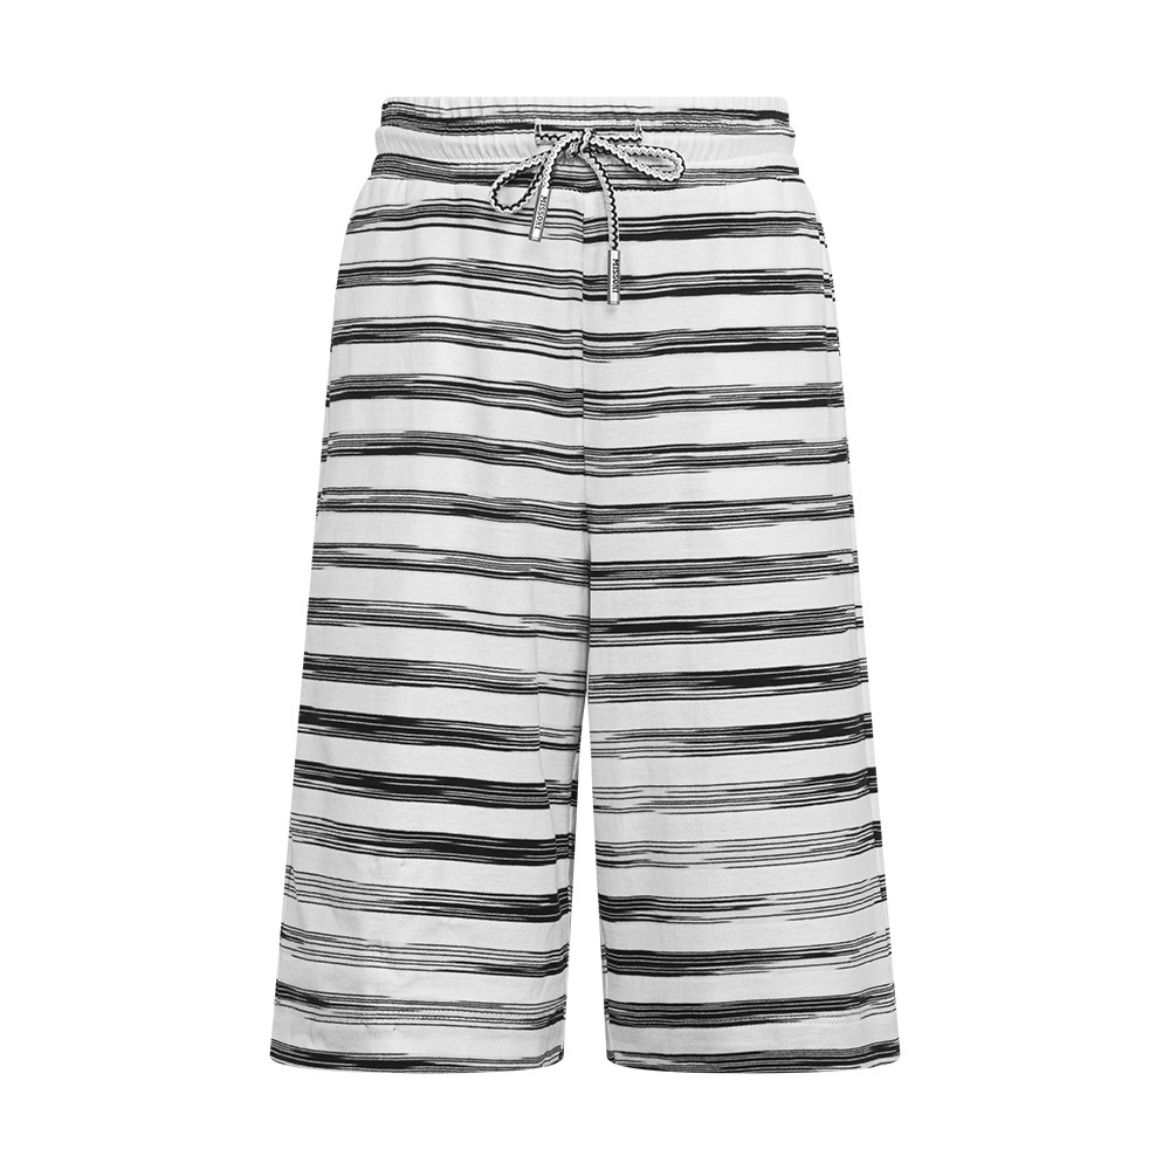 Picture of Missoni Boys Black & White Striped Shorts